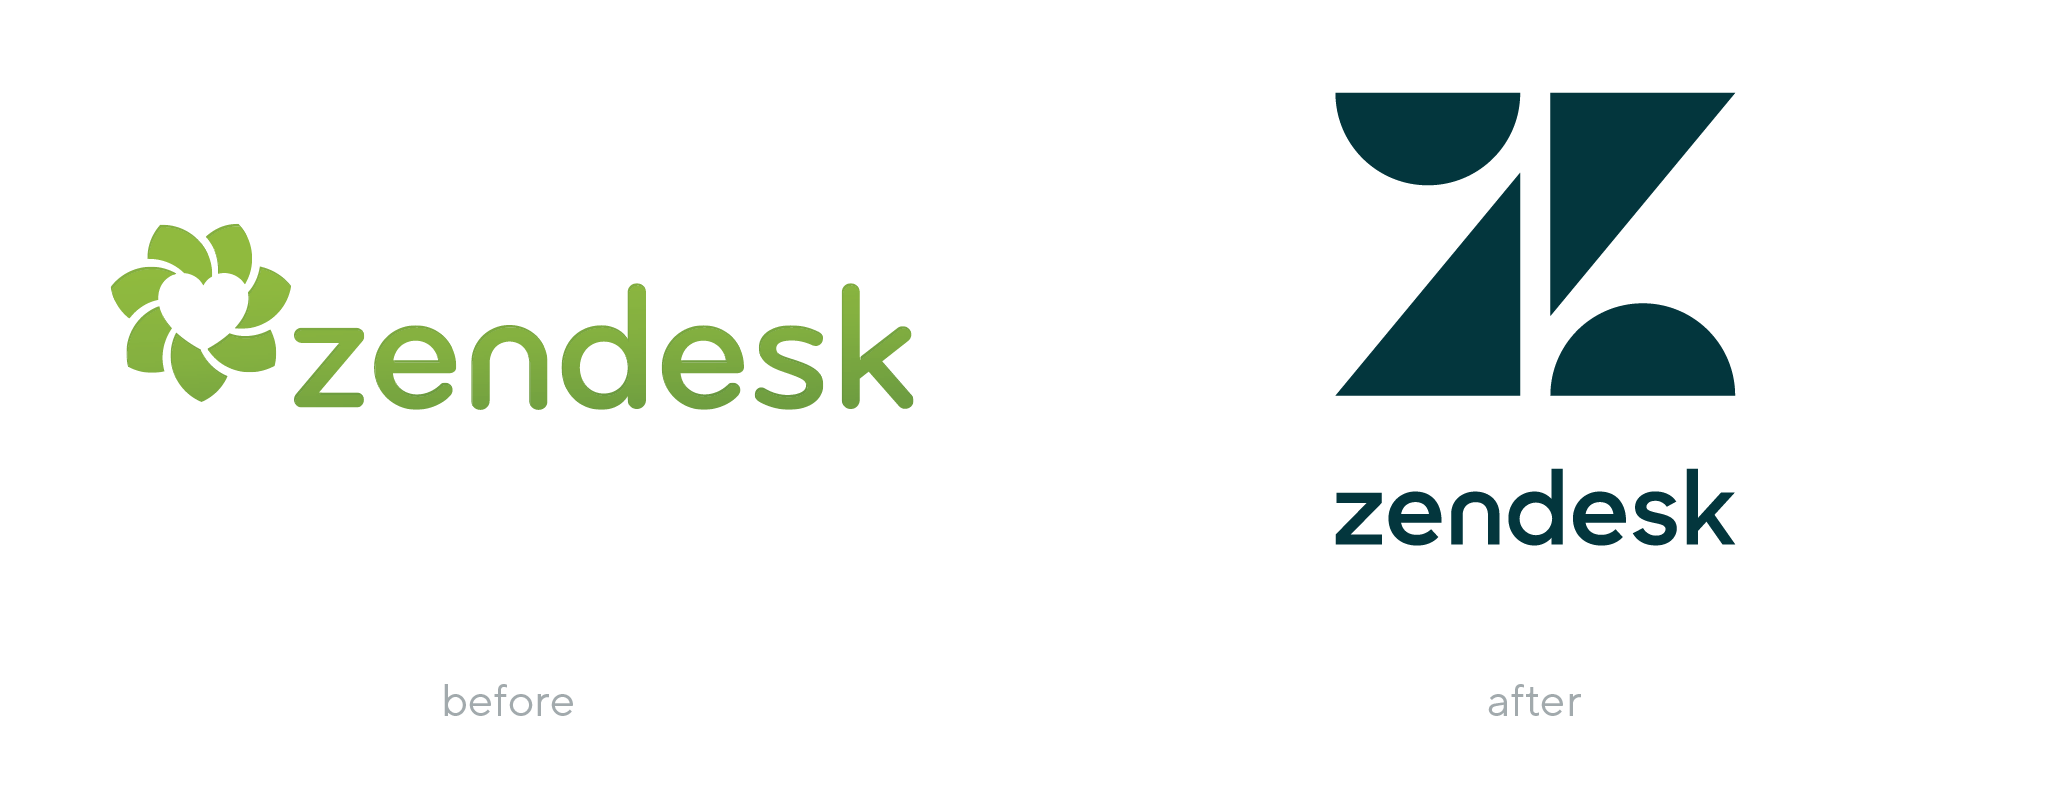 Zendesk logo before and after rebranding